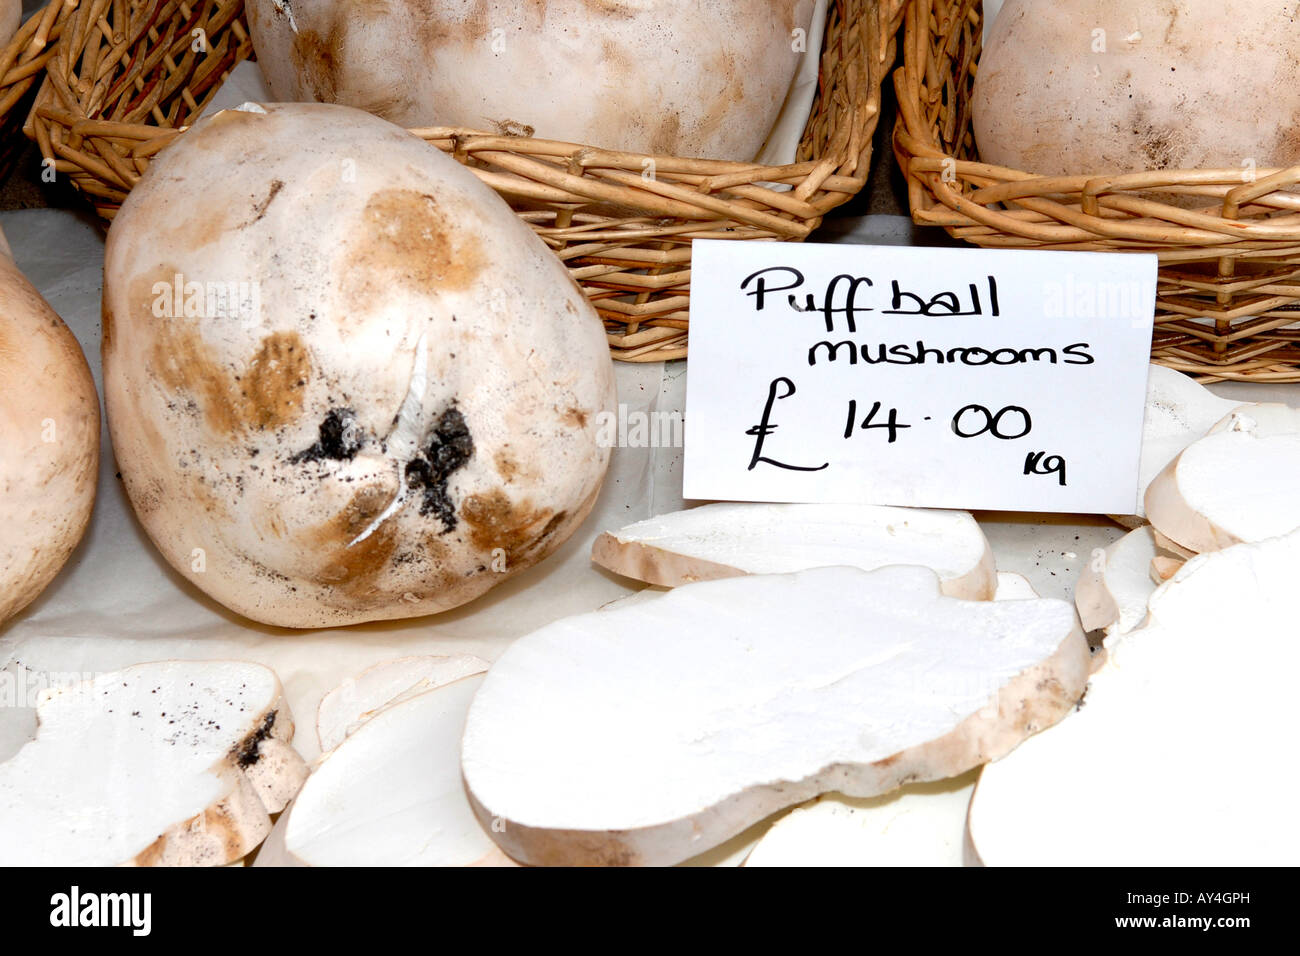 Accidentalmente Dardos Lechuguilla London Borough Market , stall display of beautiful fresh puff ball  mushrooms Stock Photo - Alamy